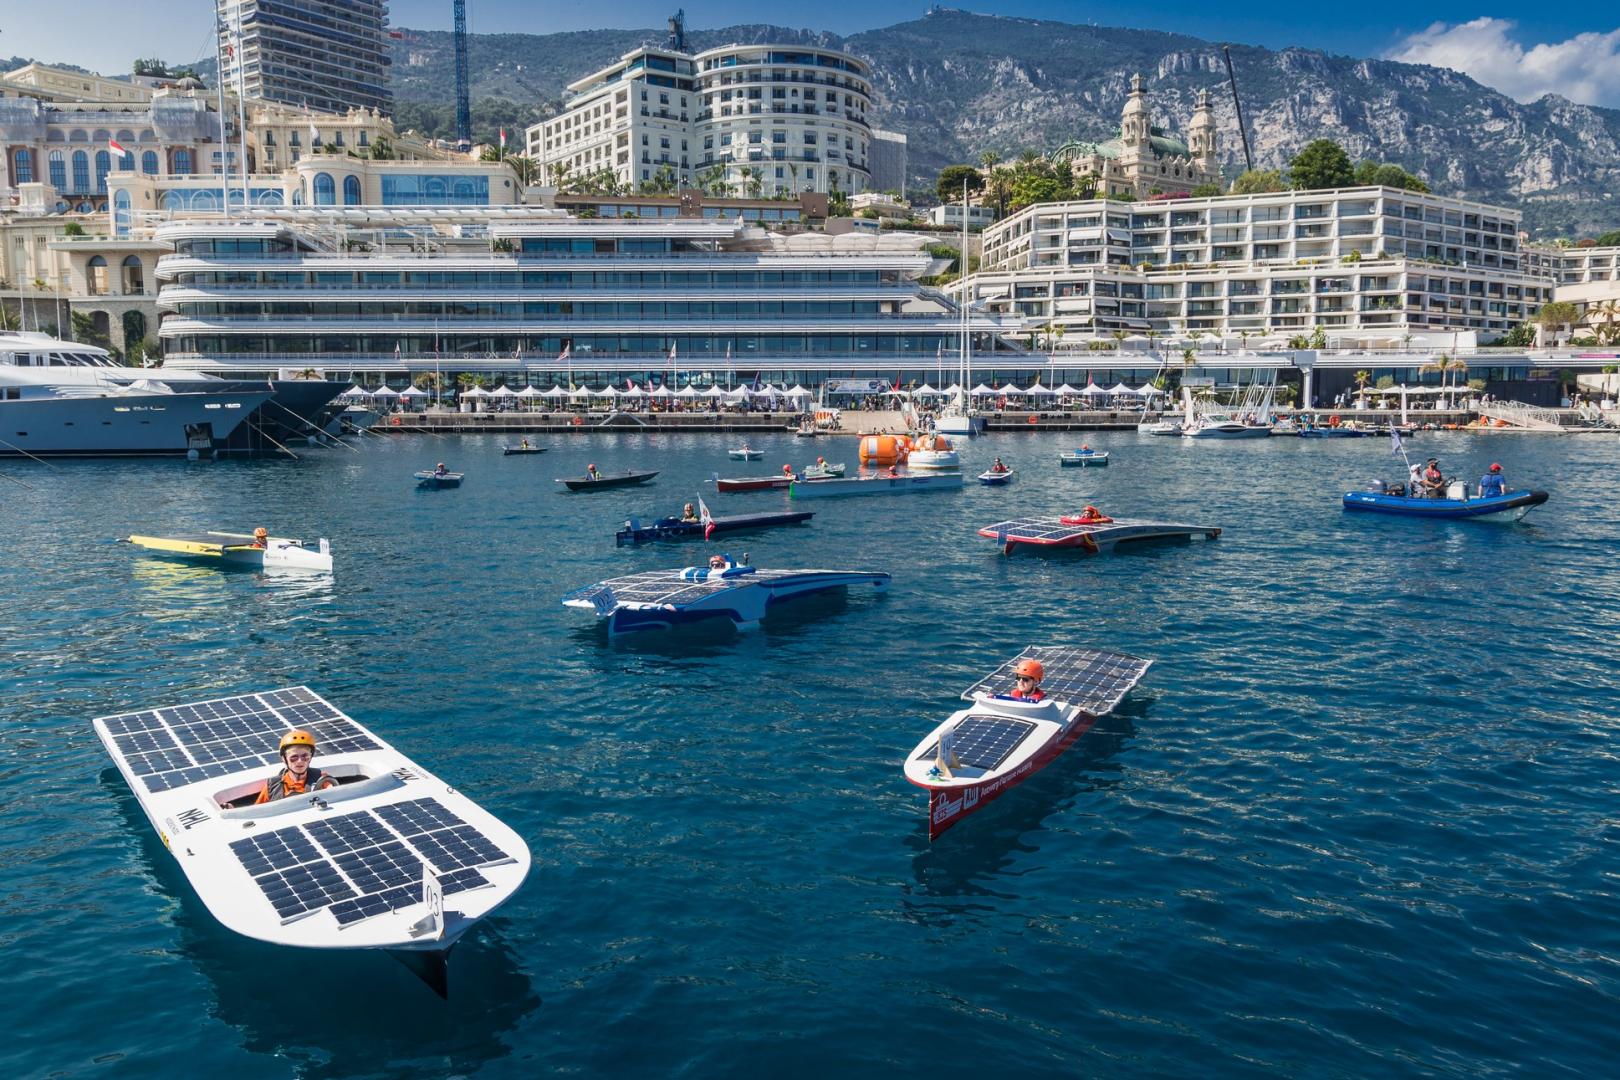 Solar & Energy Boat Challenge @mesiBD